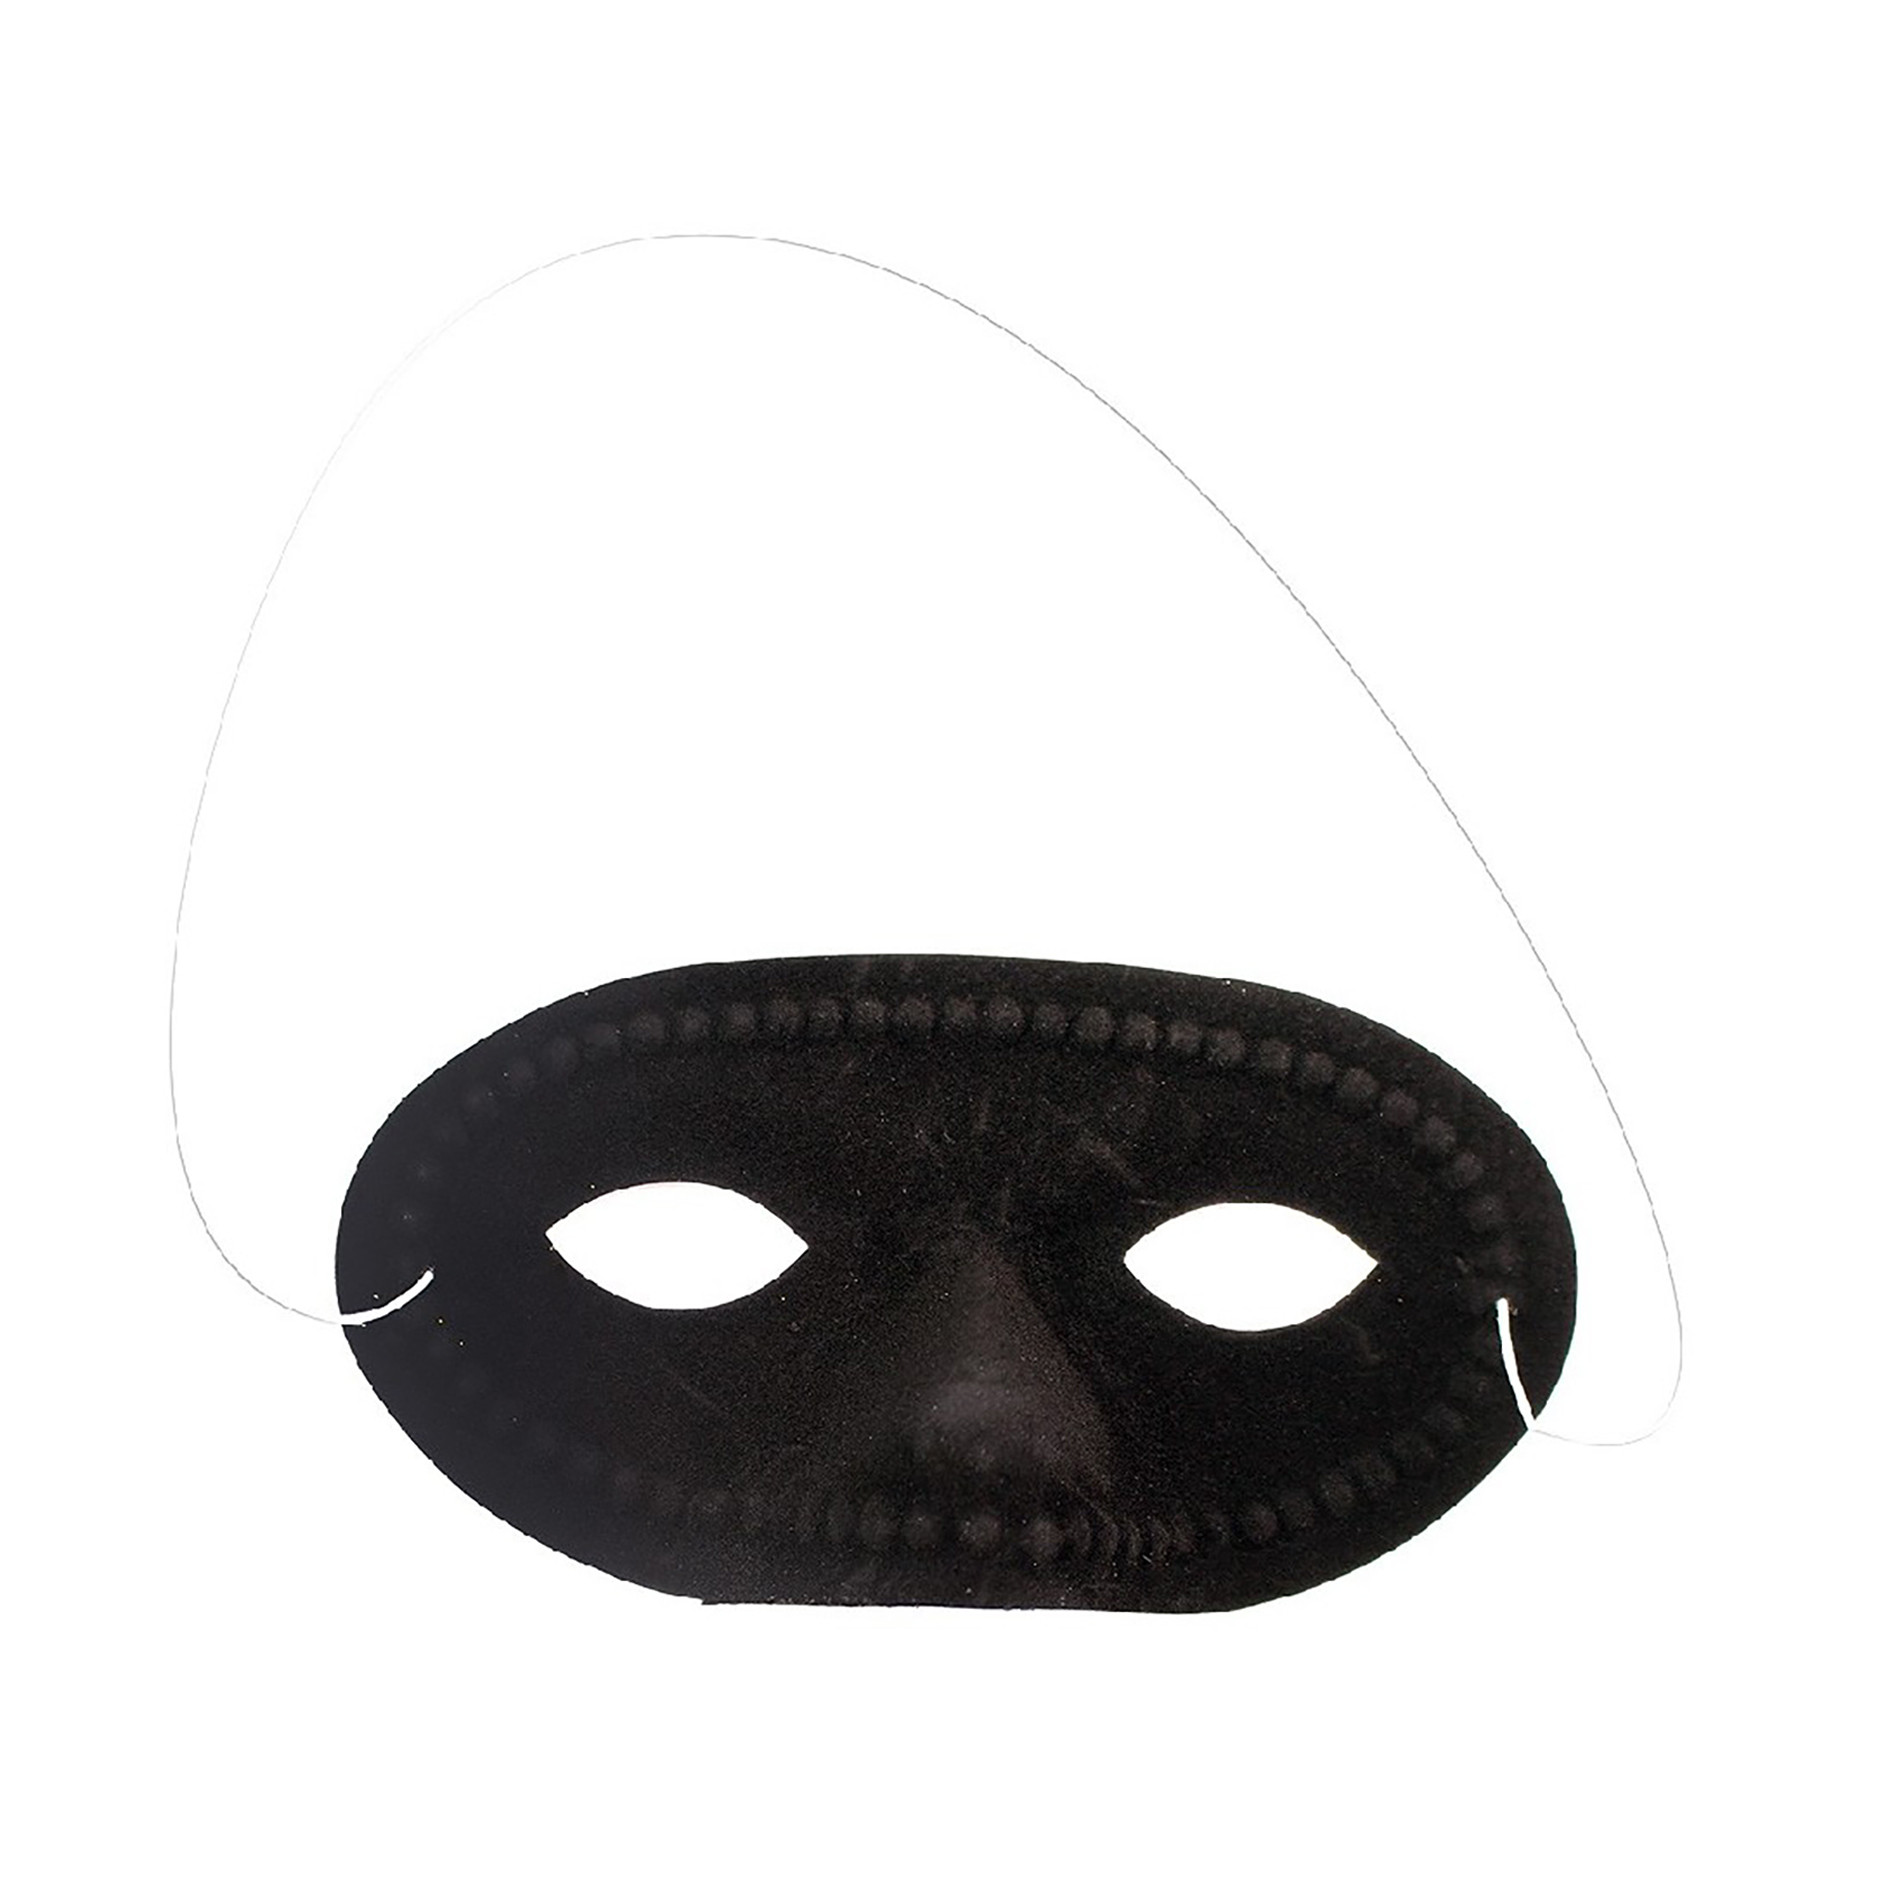 the black eye mask